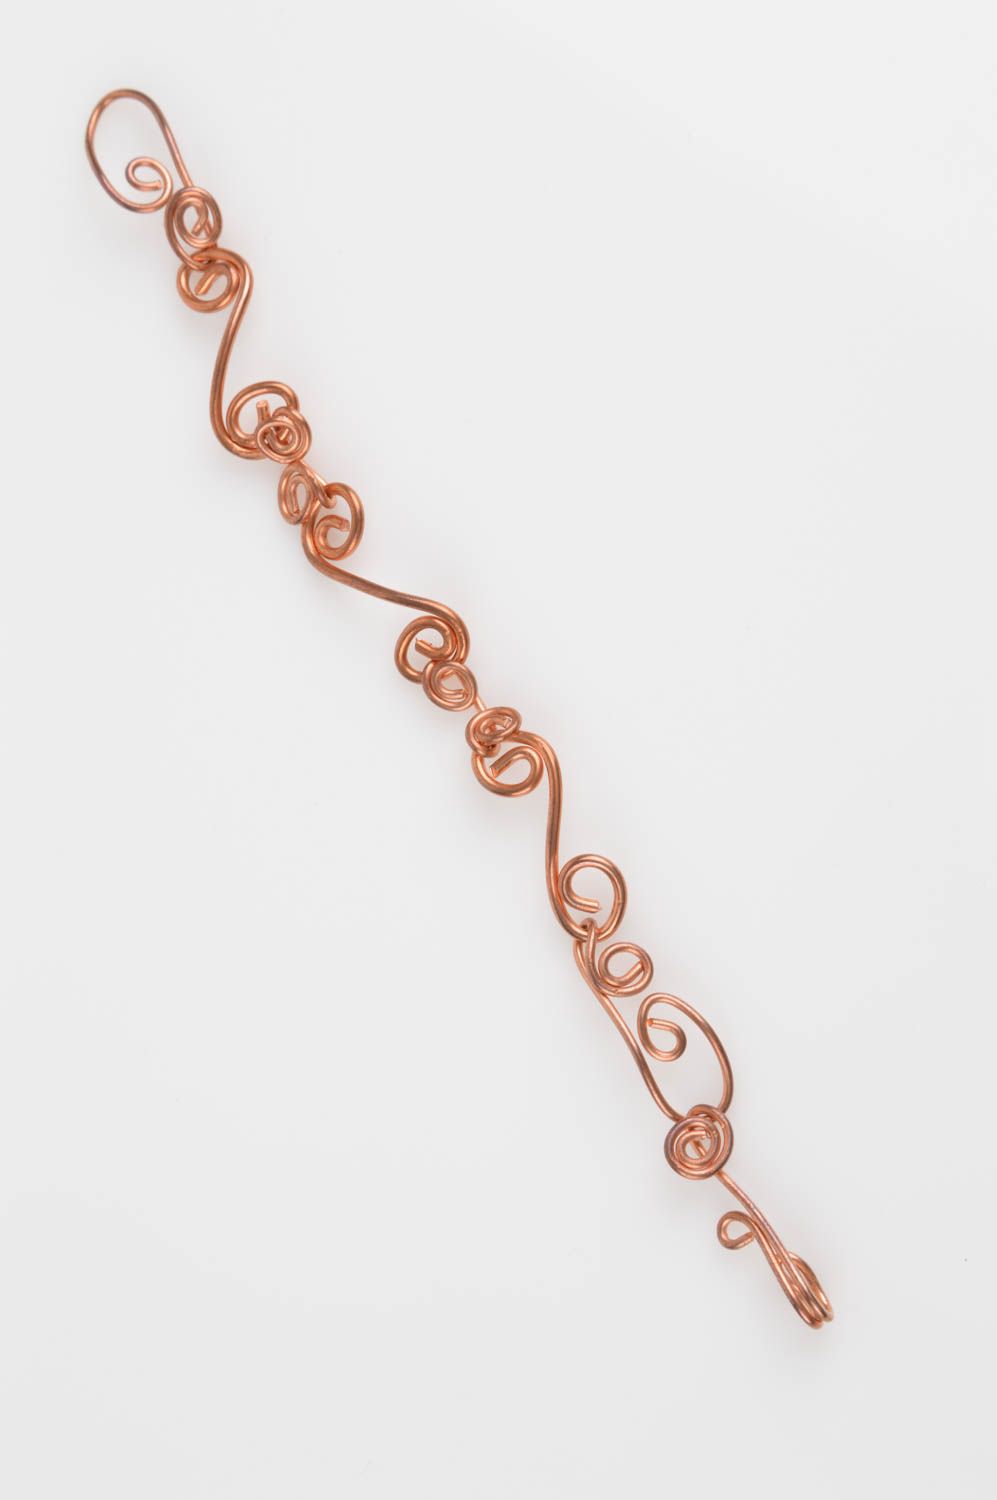 Copper bracelet designer accessories handmade jewelry womens bracelet gift ideas photo 4